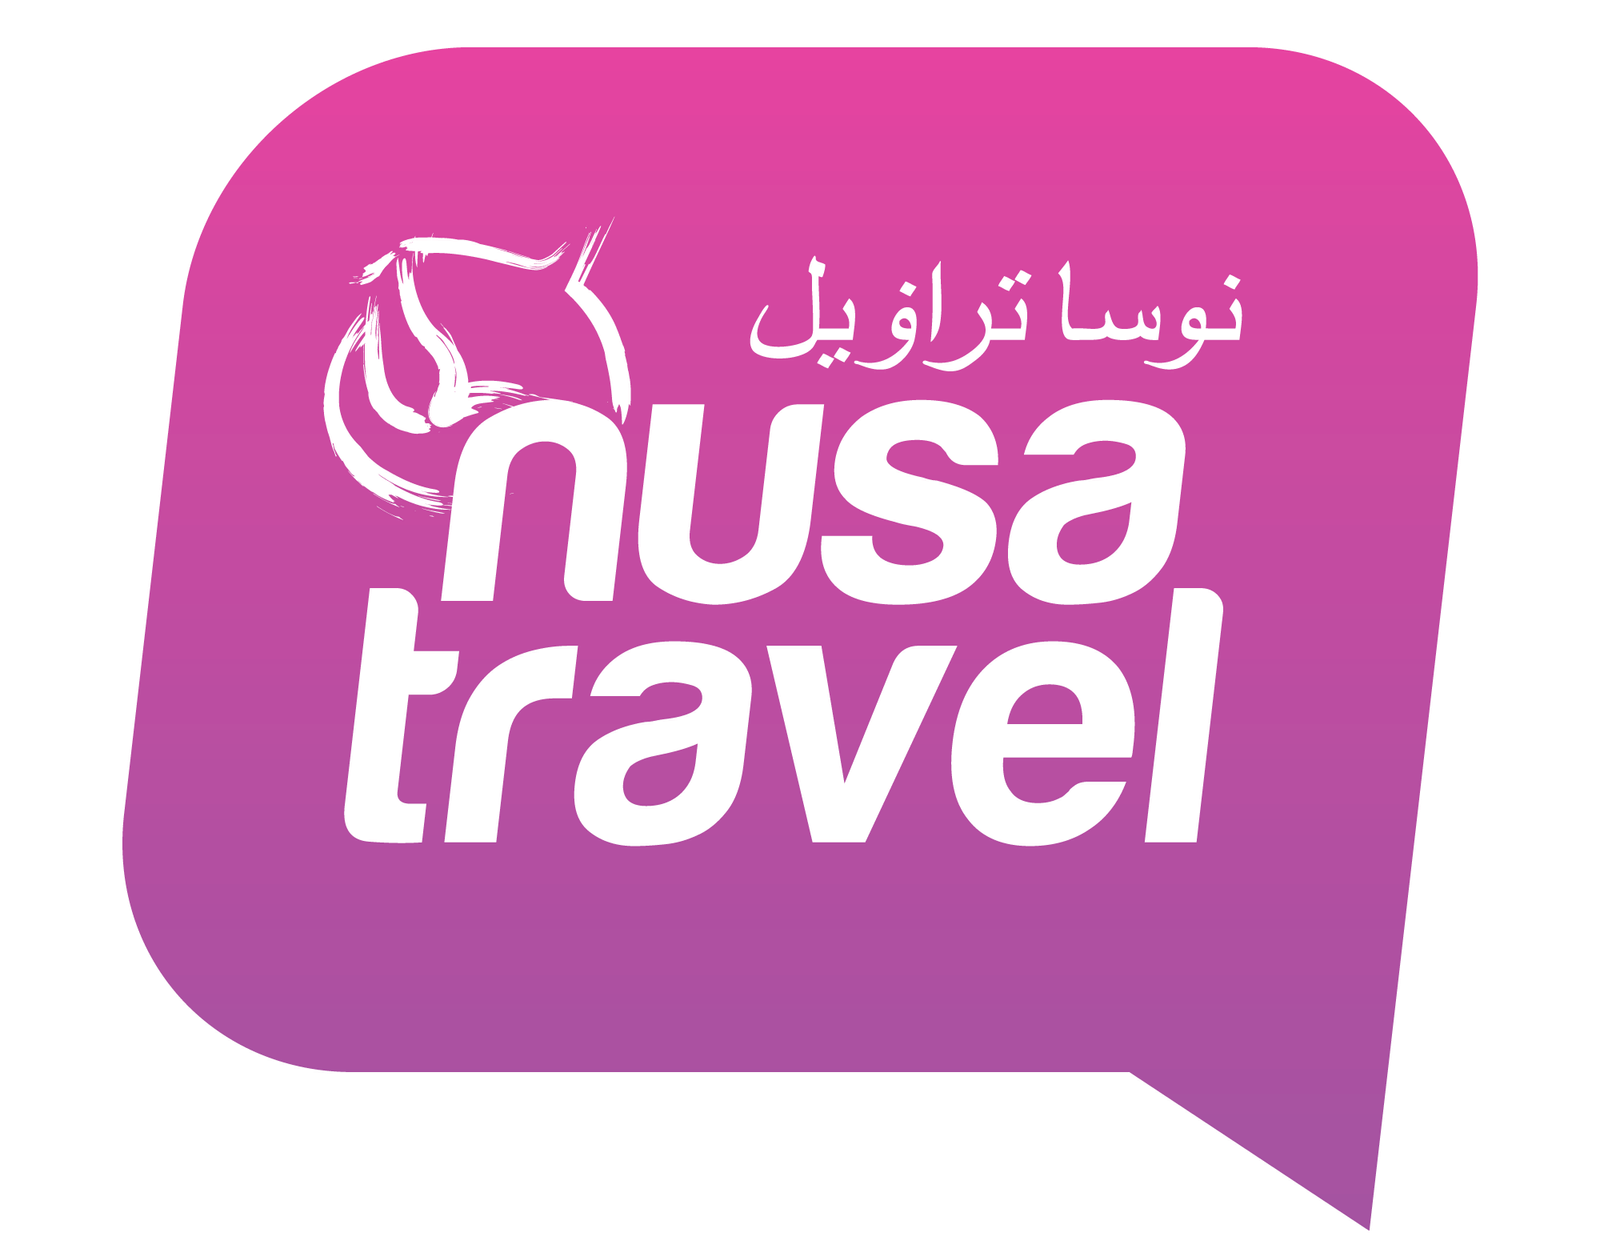 Nusatra Tours – That Was Easy!